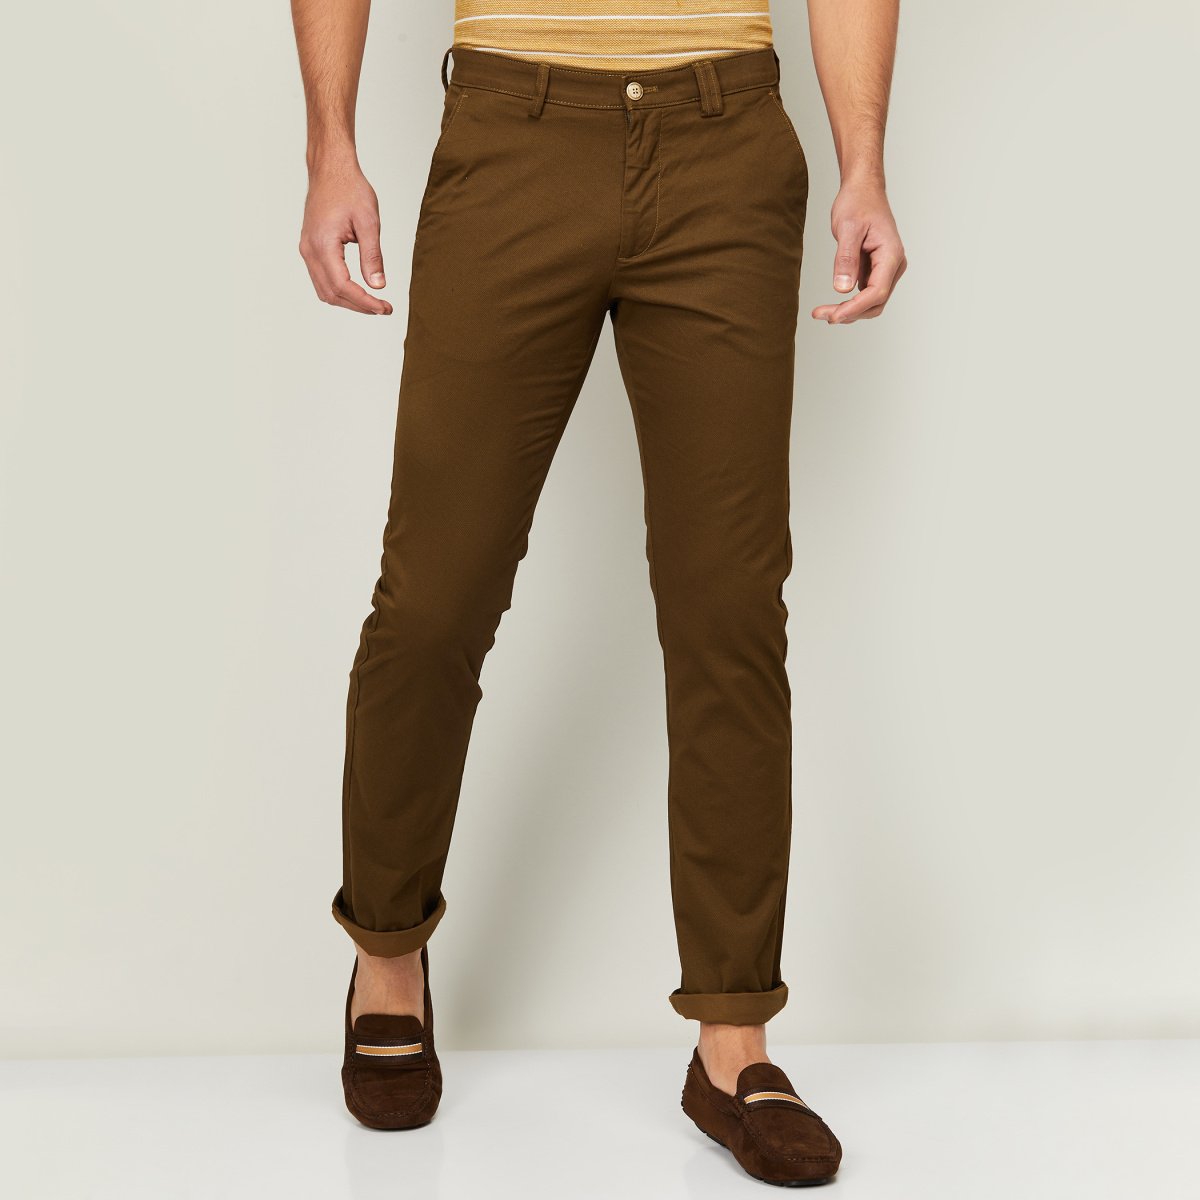 Buy Men Brown Slim Fit Solid Casual Trousers Online - 274907 | Allen Solly